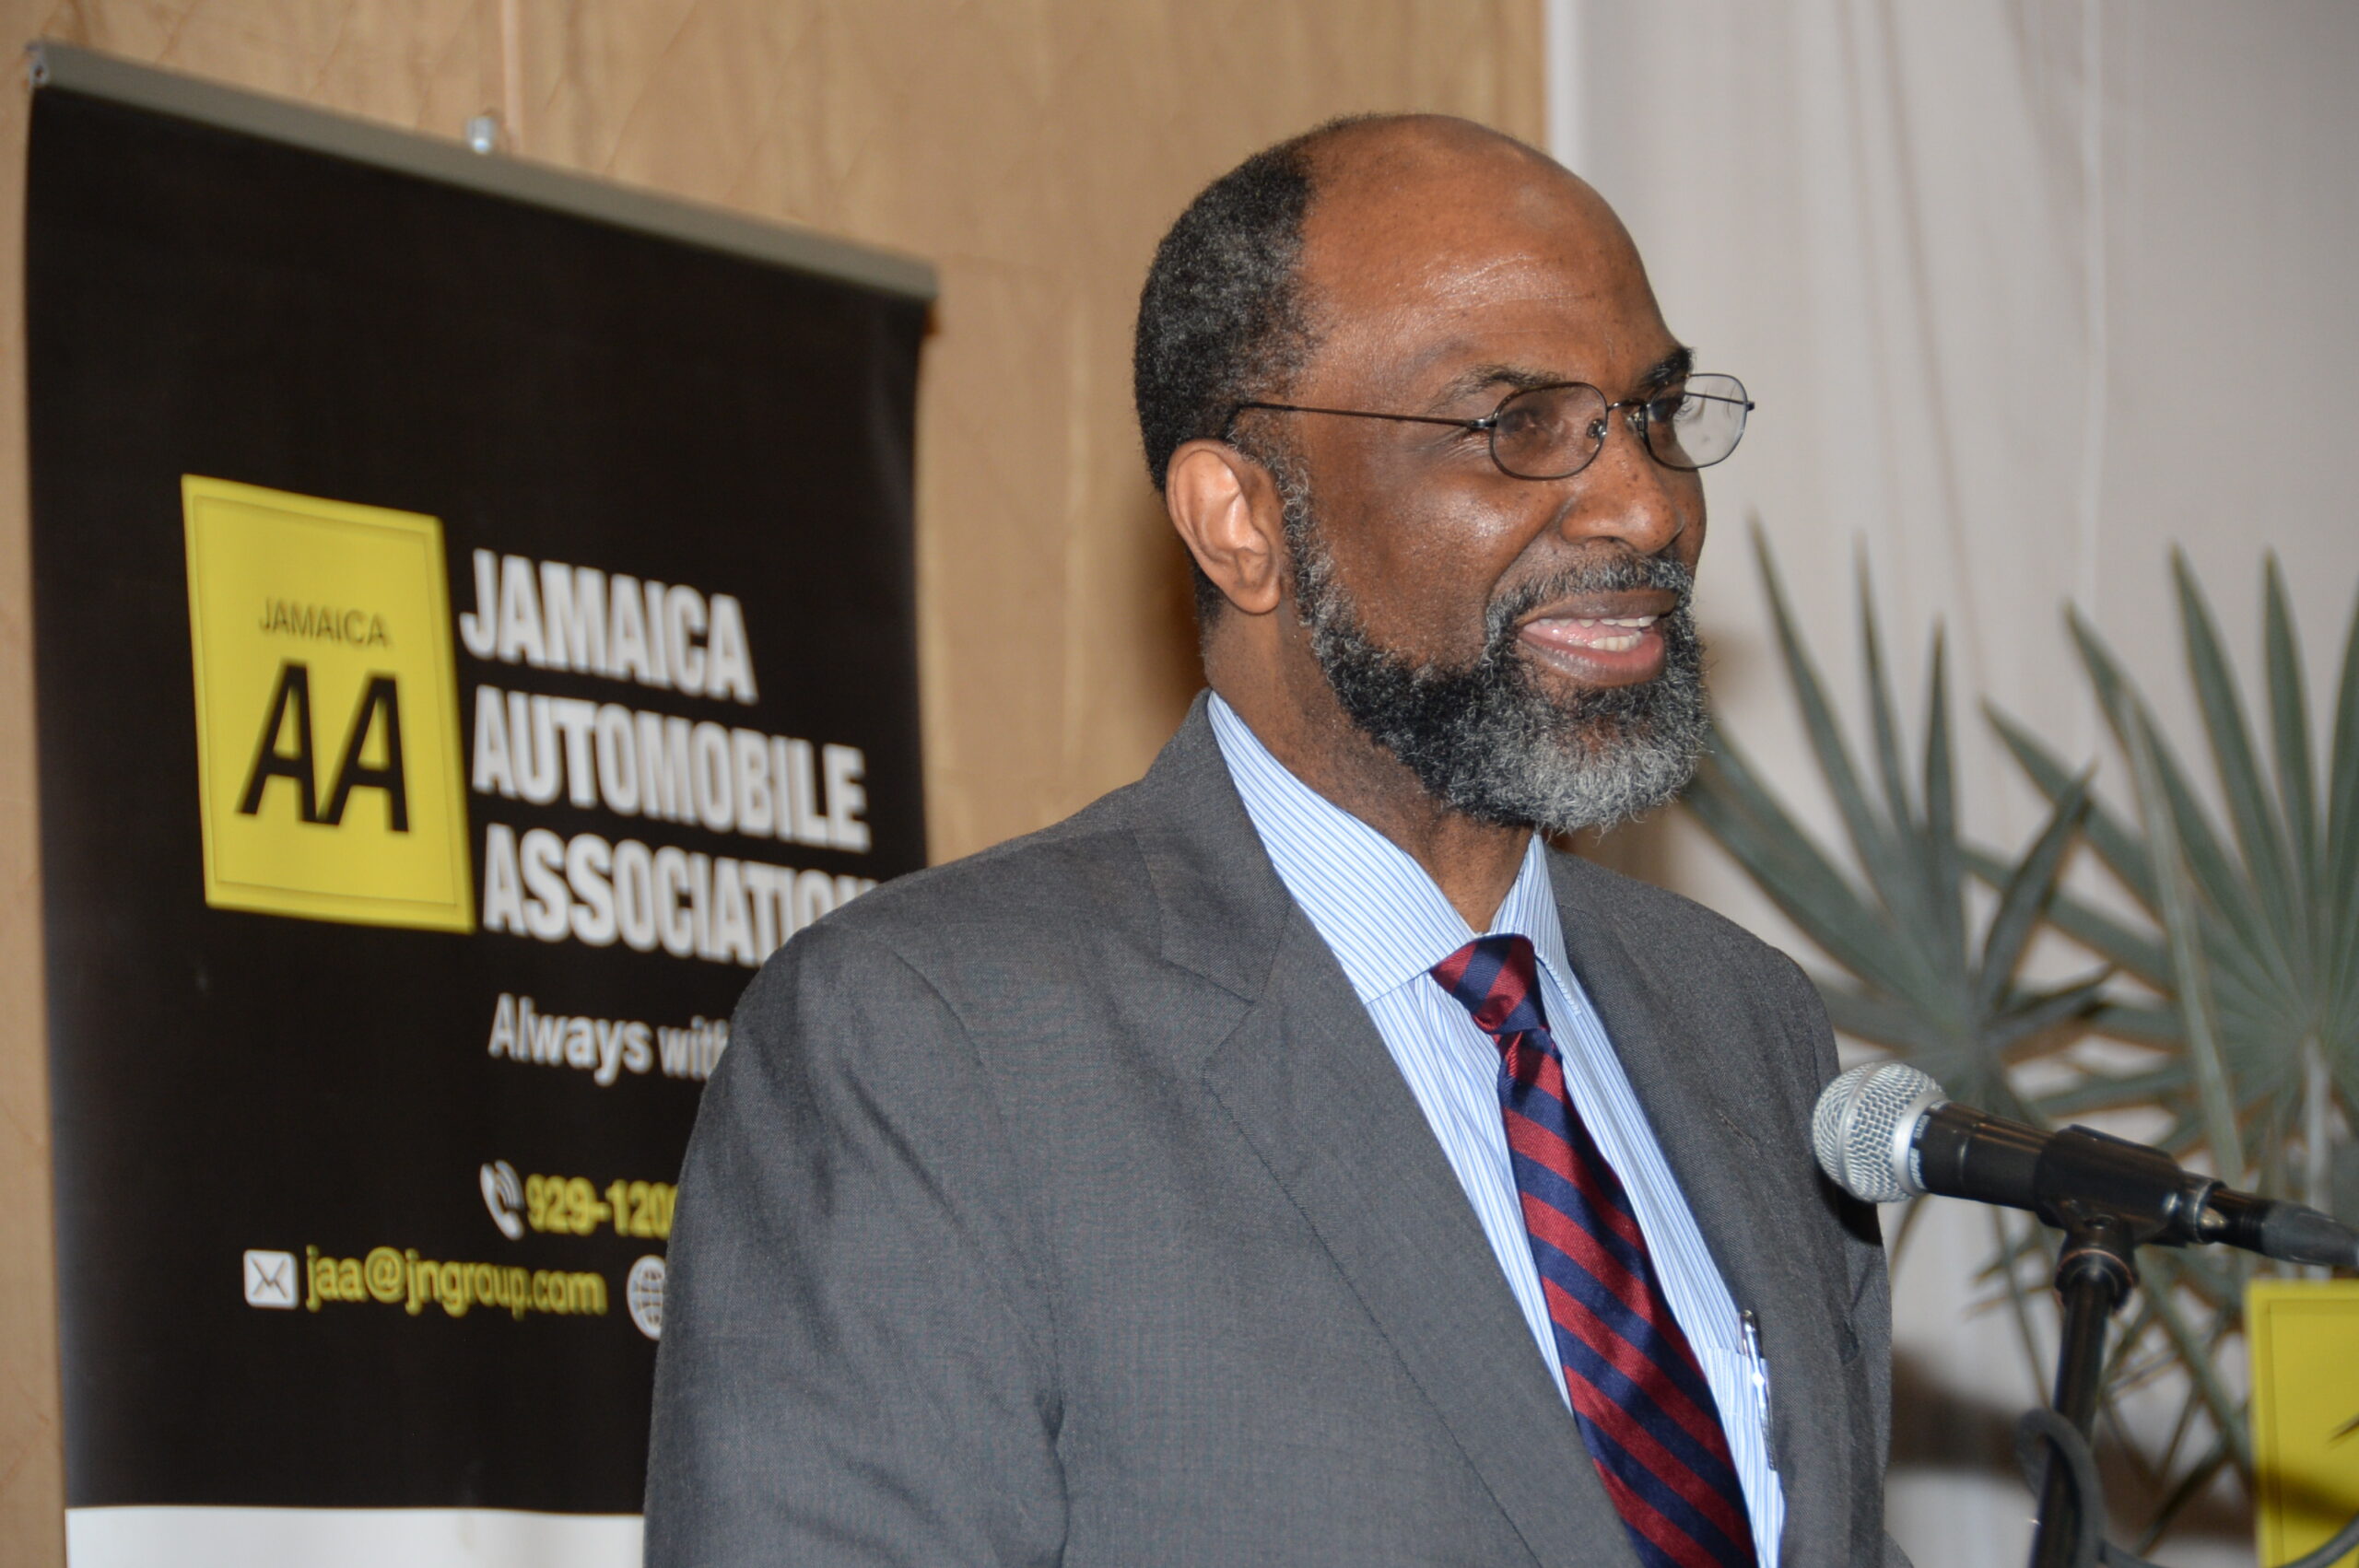 Earl Jarrett, Chairman Jamaica Automobile Association